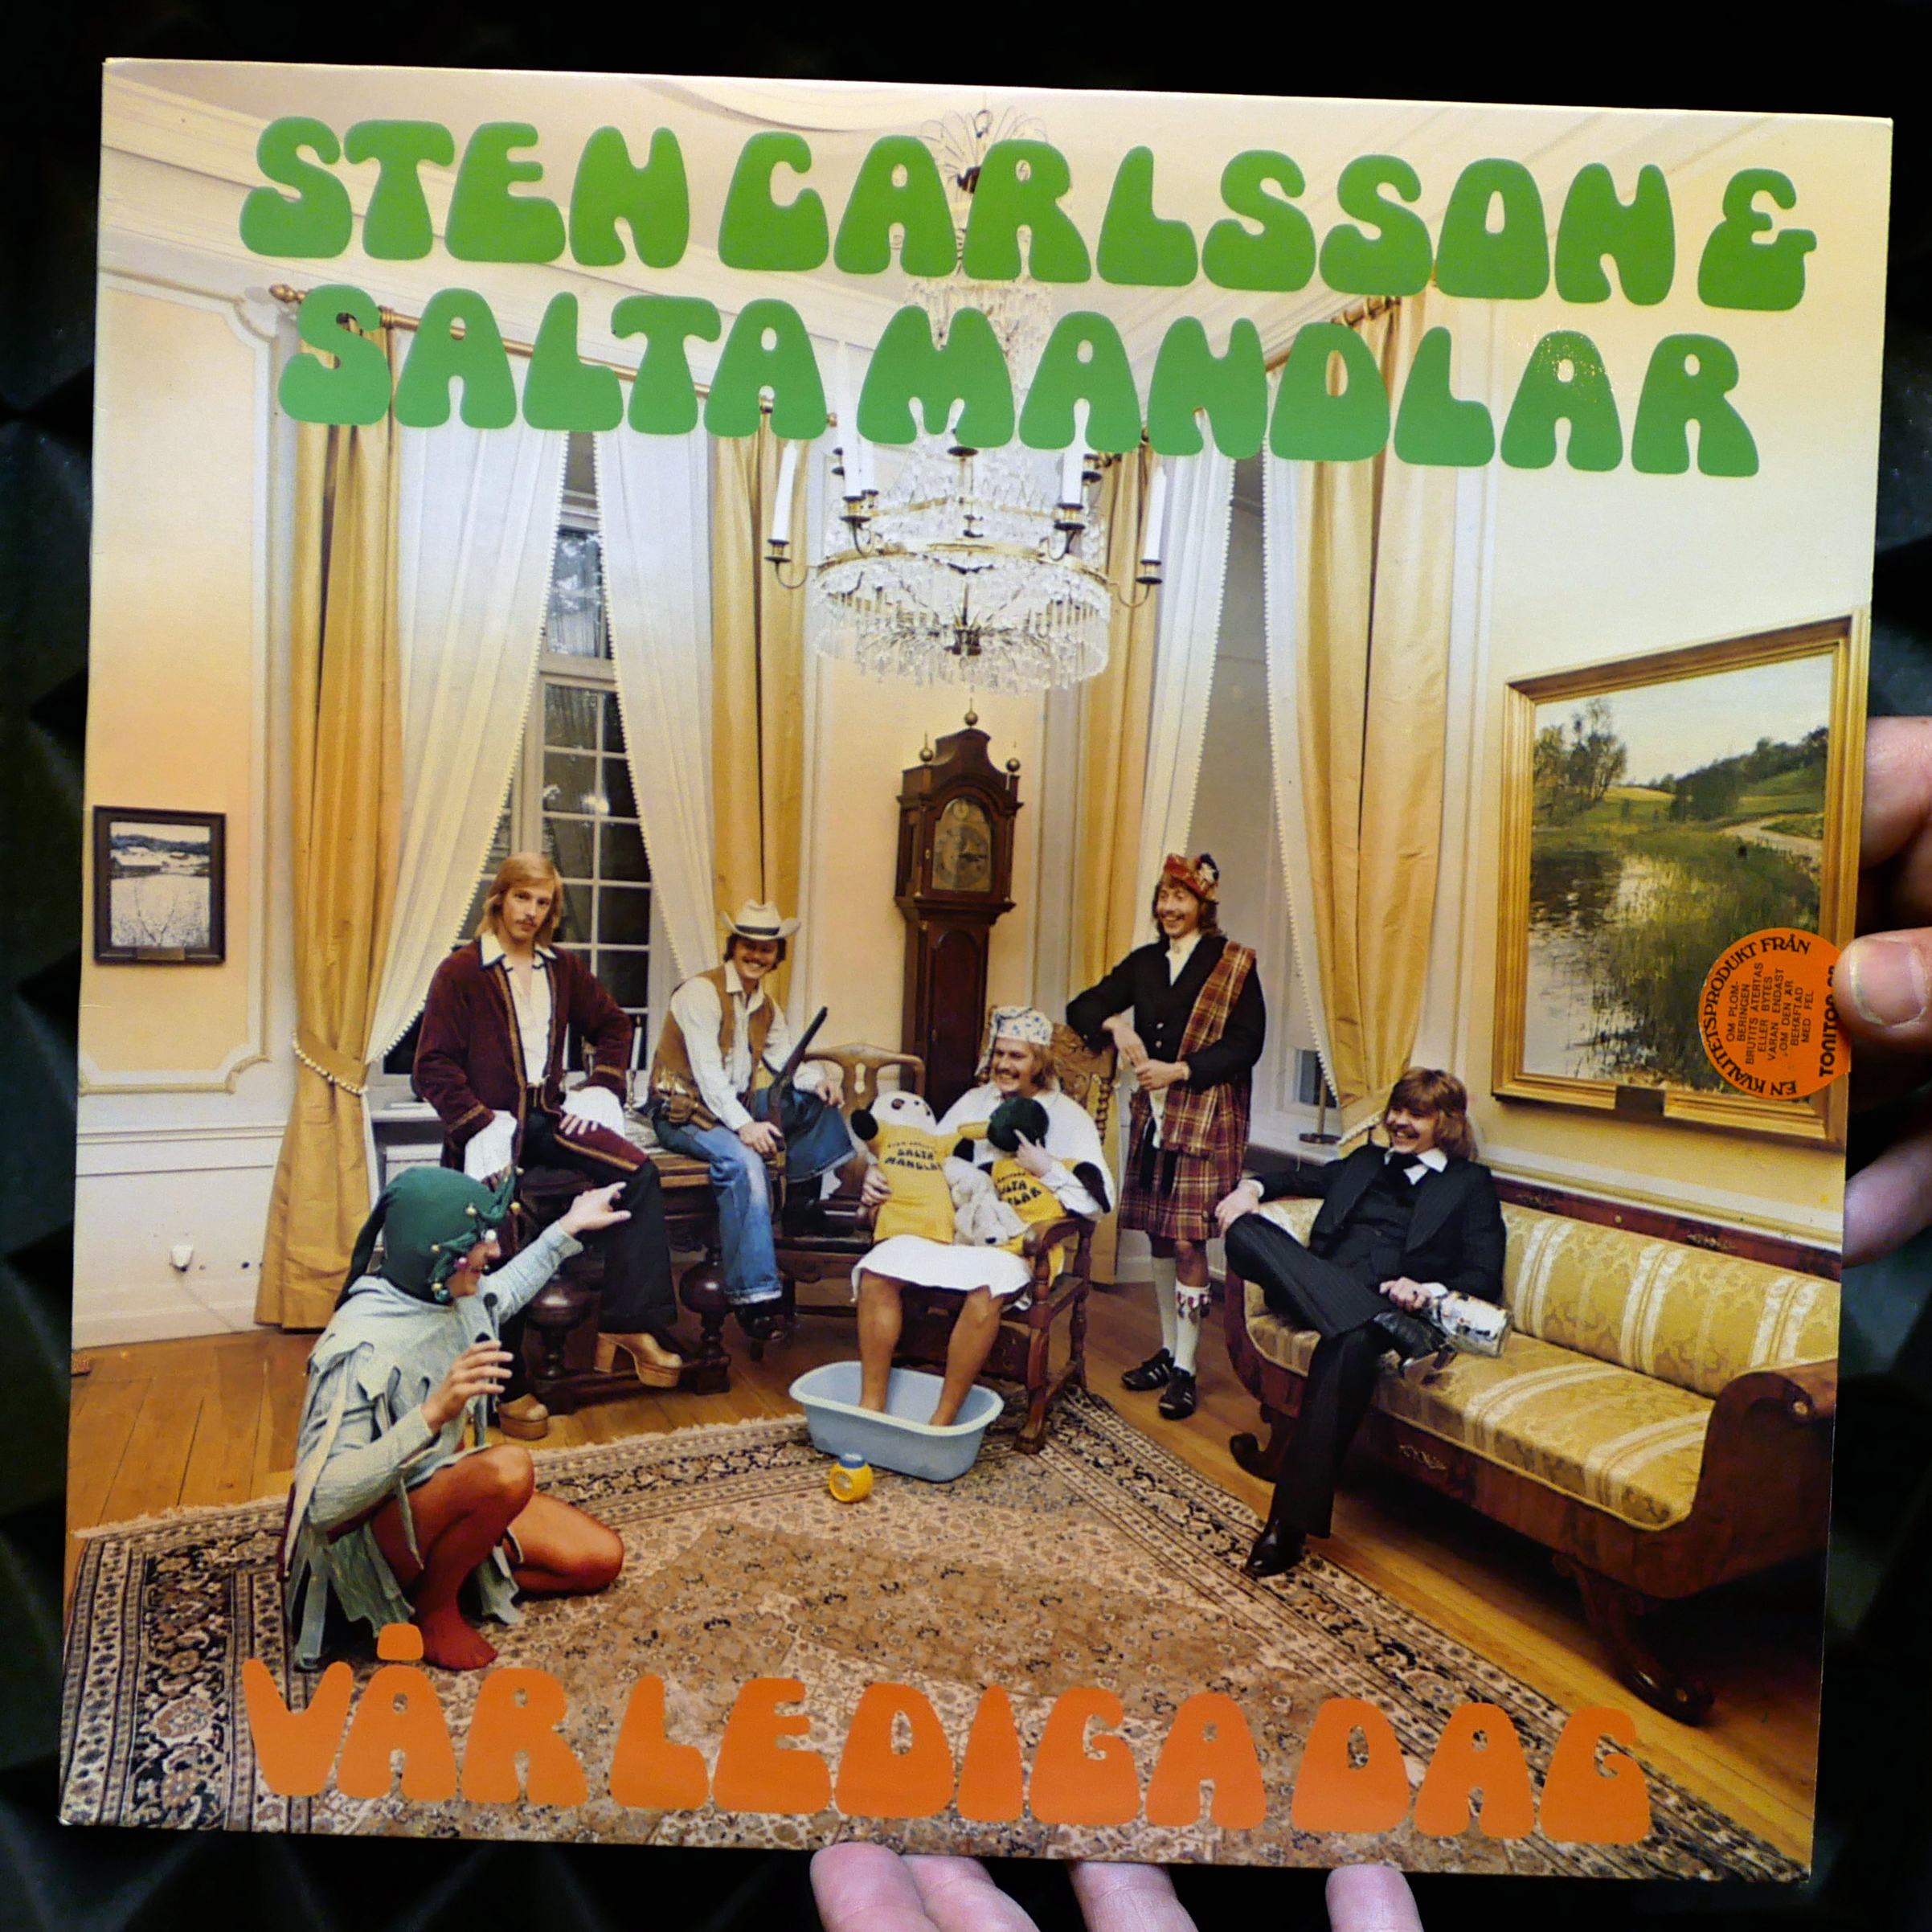 Sten Carlsson & Salta Mandlar – Vår lediga dag [LP, 1976]